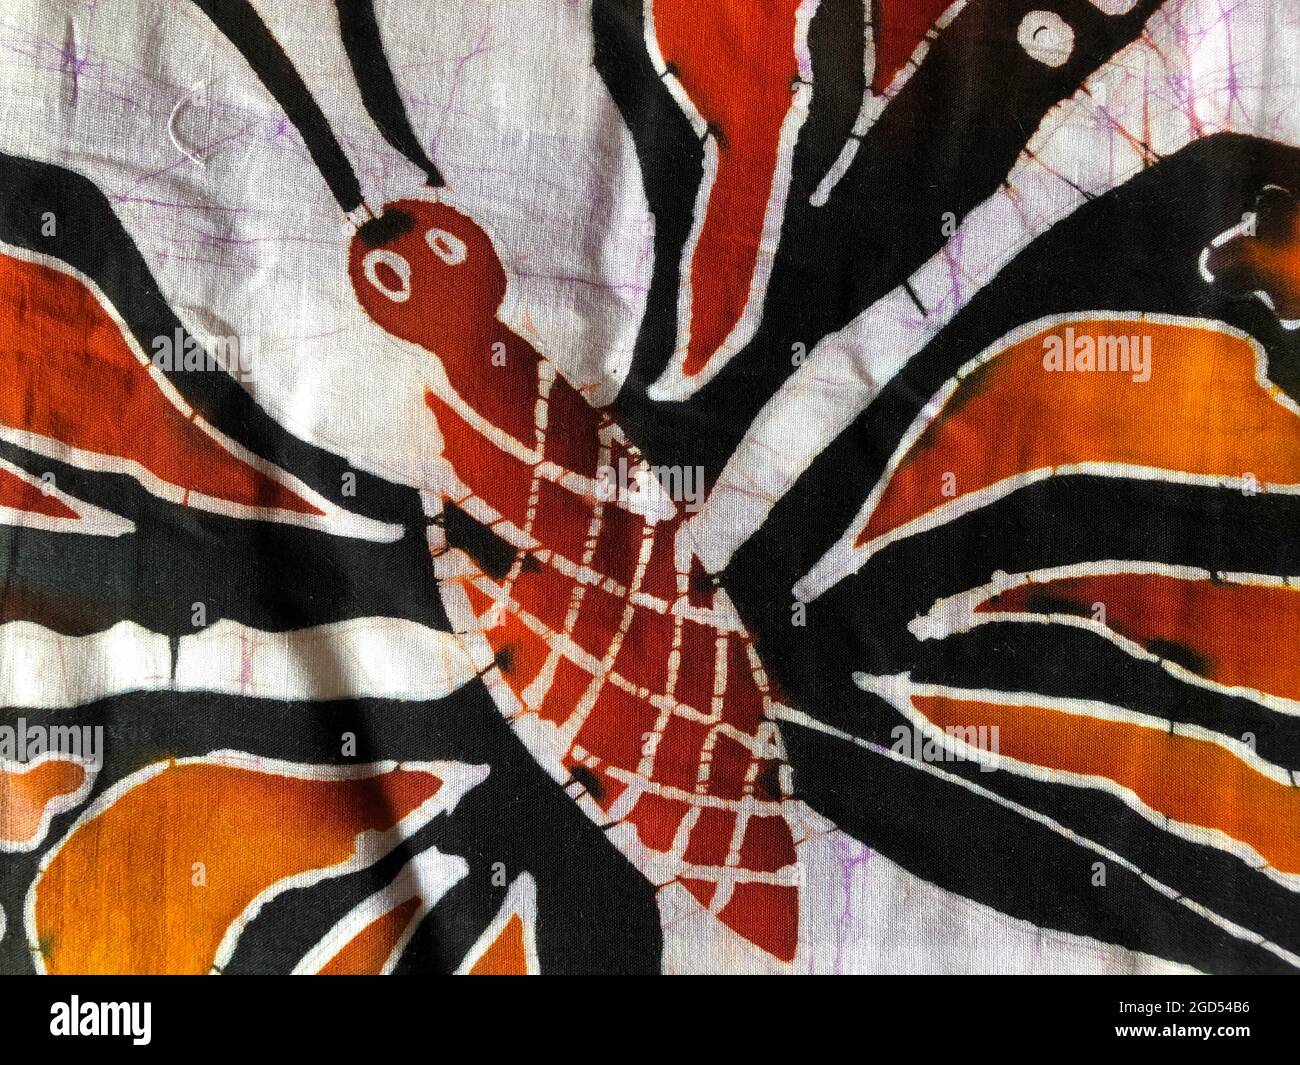 how batik applied fabric, closeup view of fabric painting art with batik technique Stock Photo